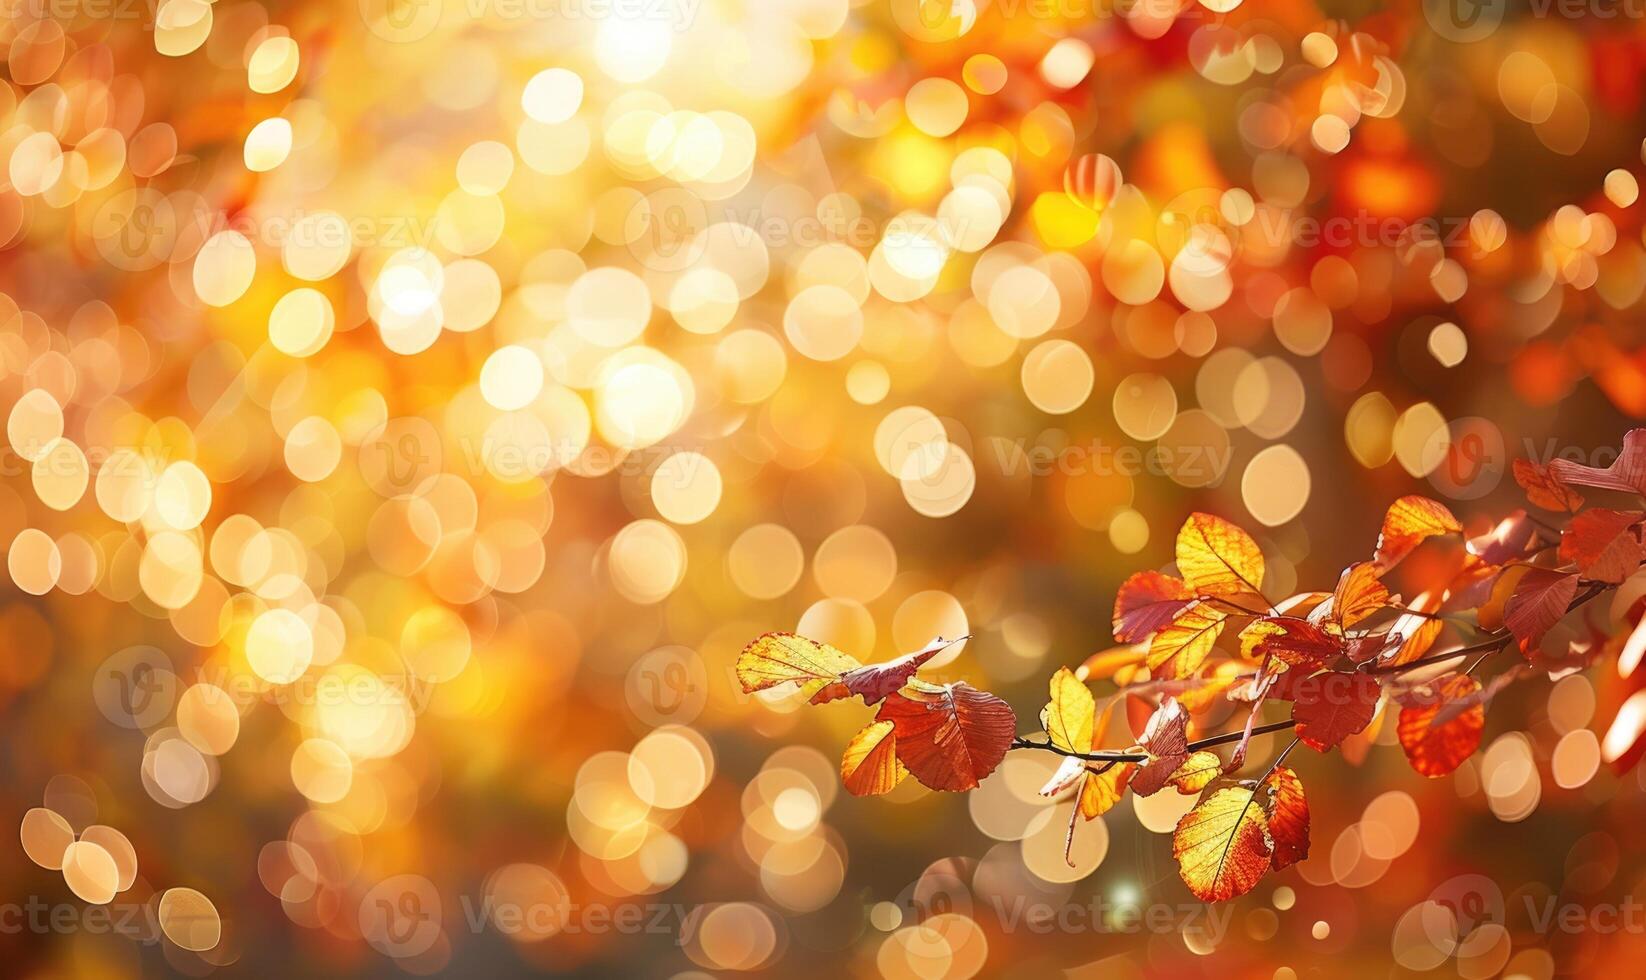 Sparkling bokeh lights against a backdrop of autumn foliage photo